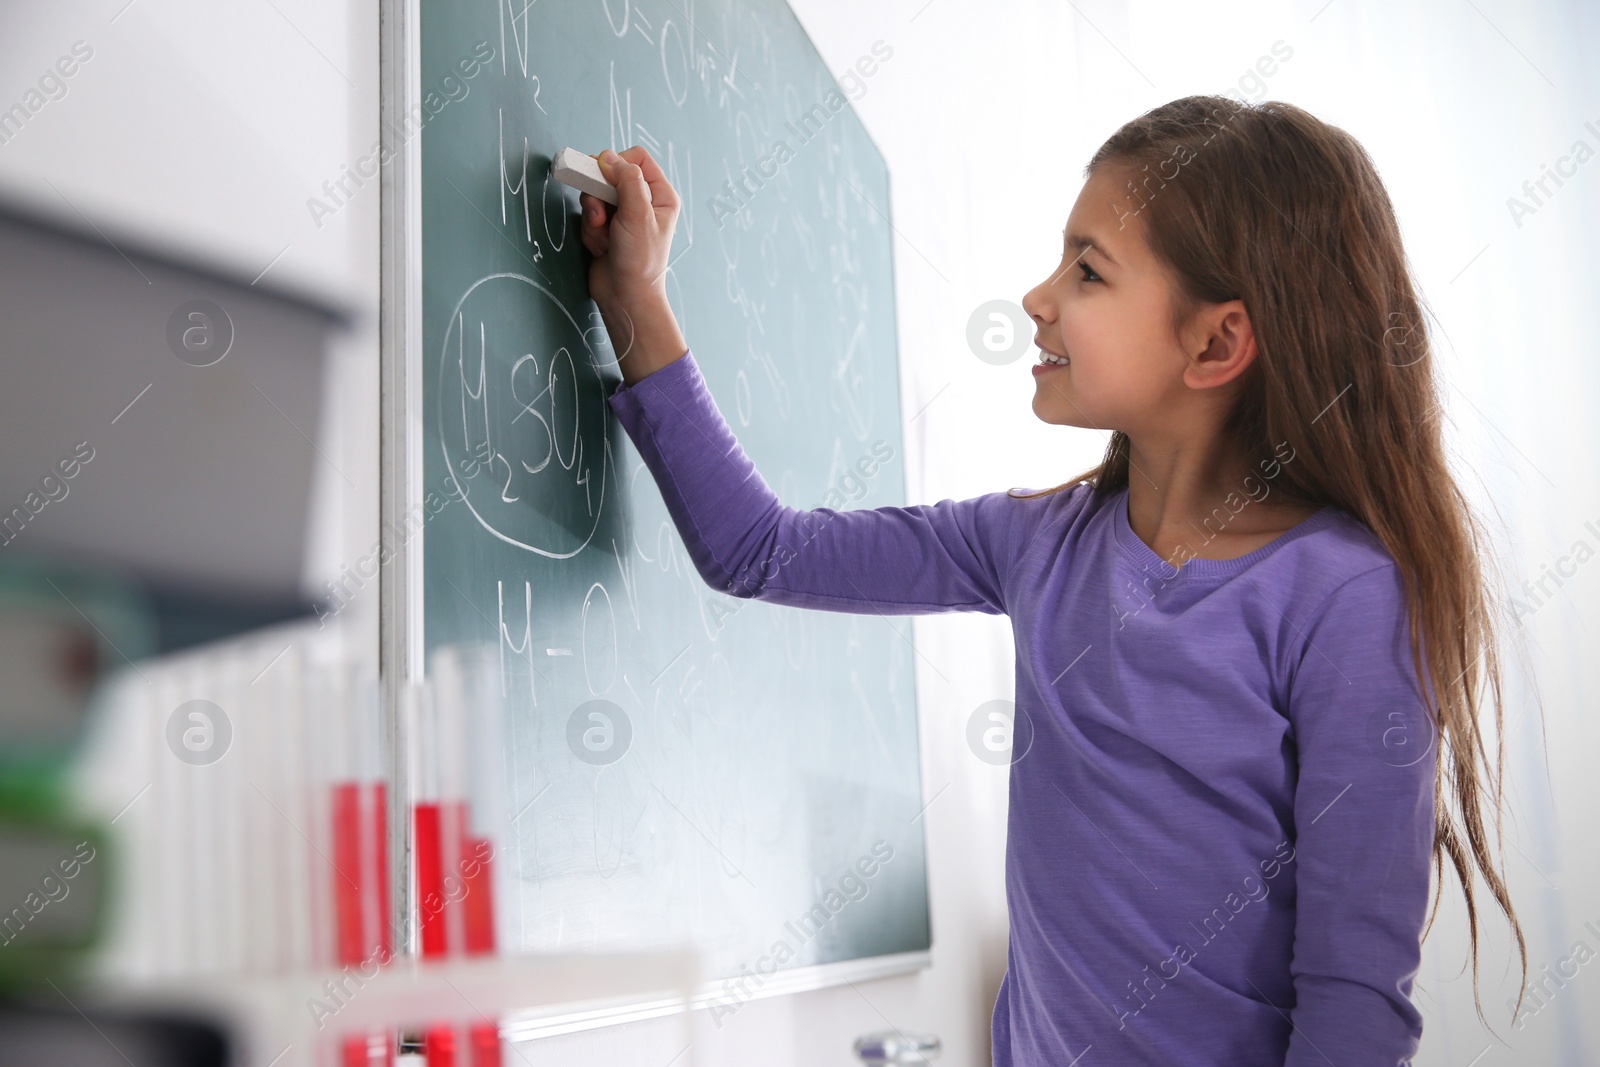 Photo of Schoolgirl writing chemical formulas on chalkboard in classroom